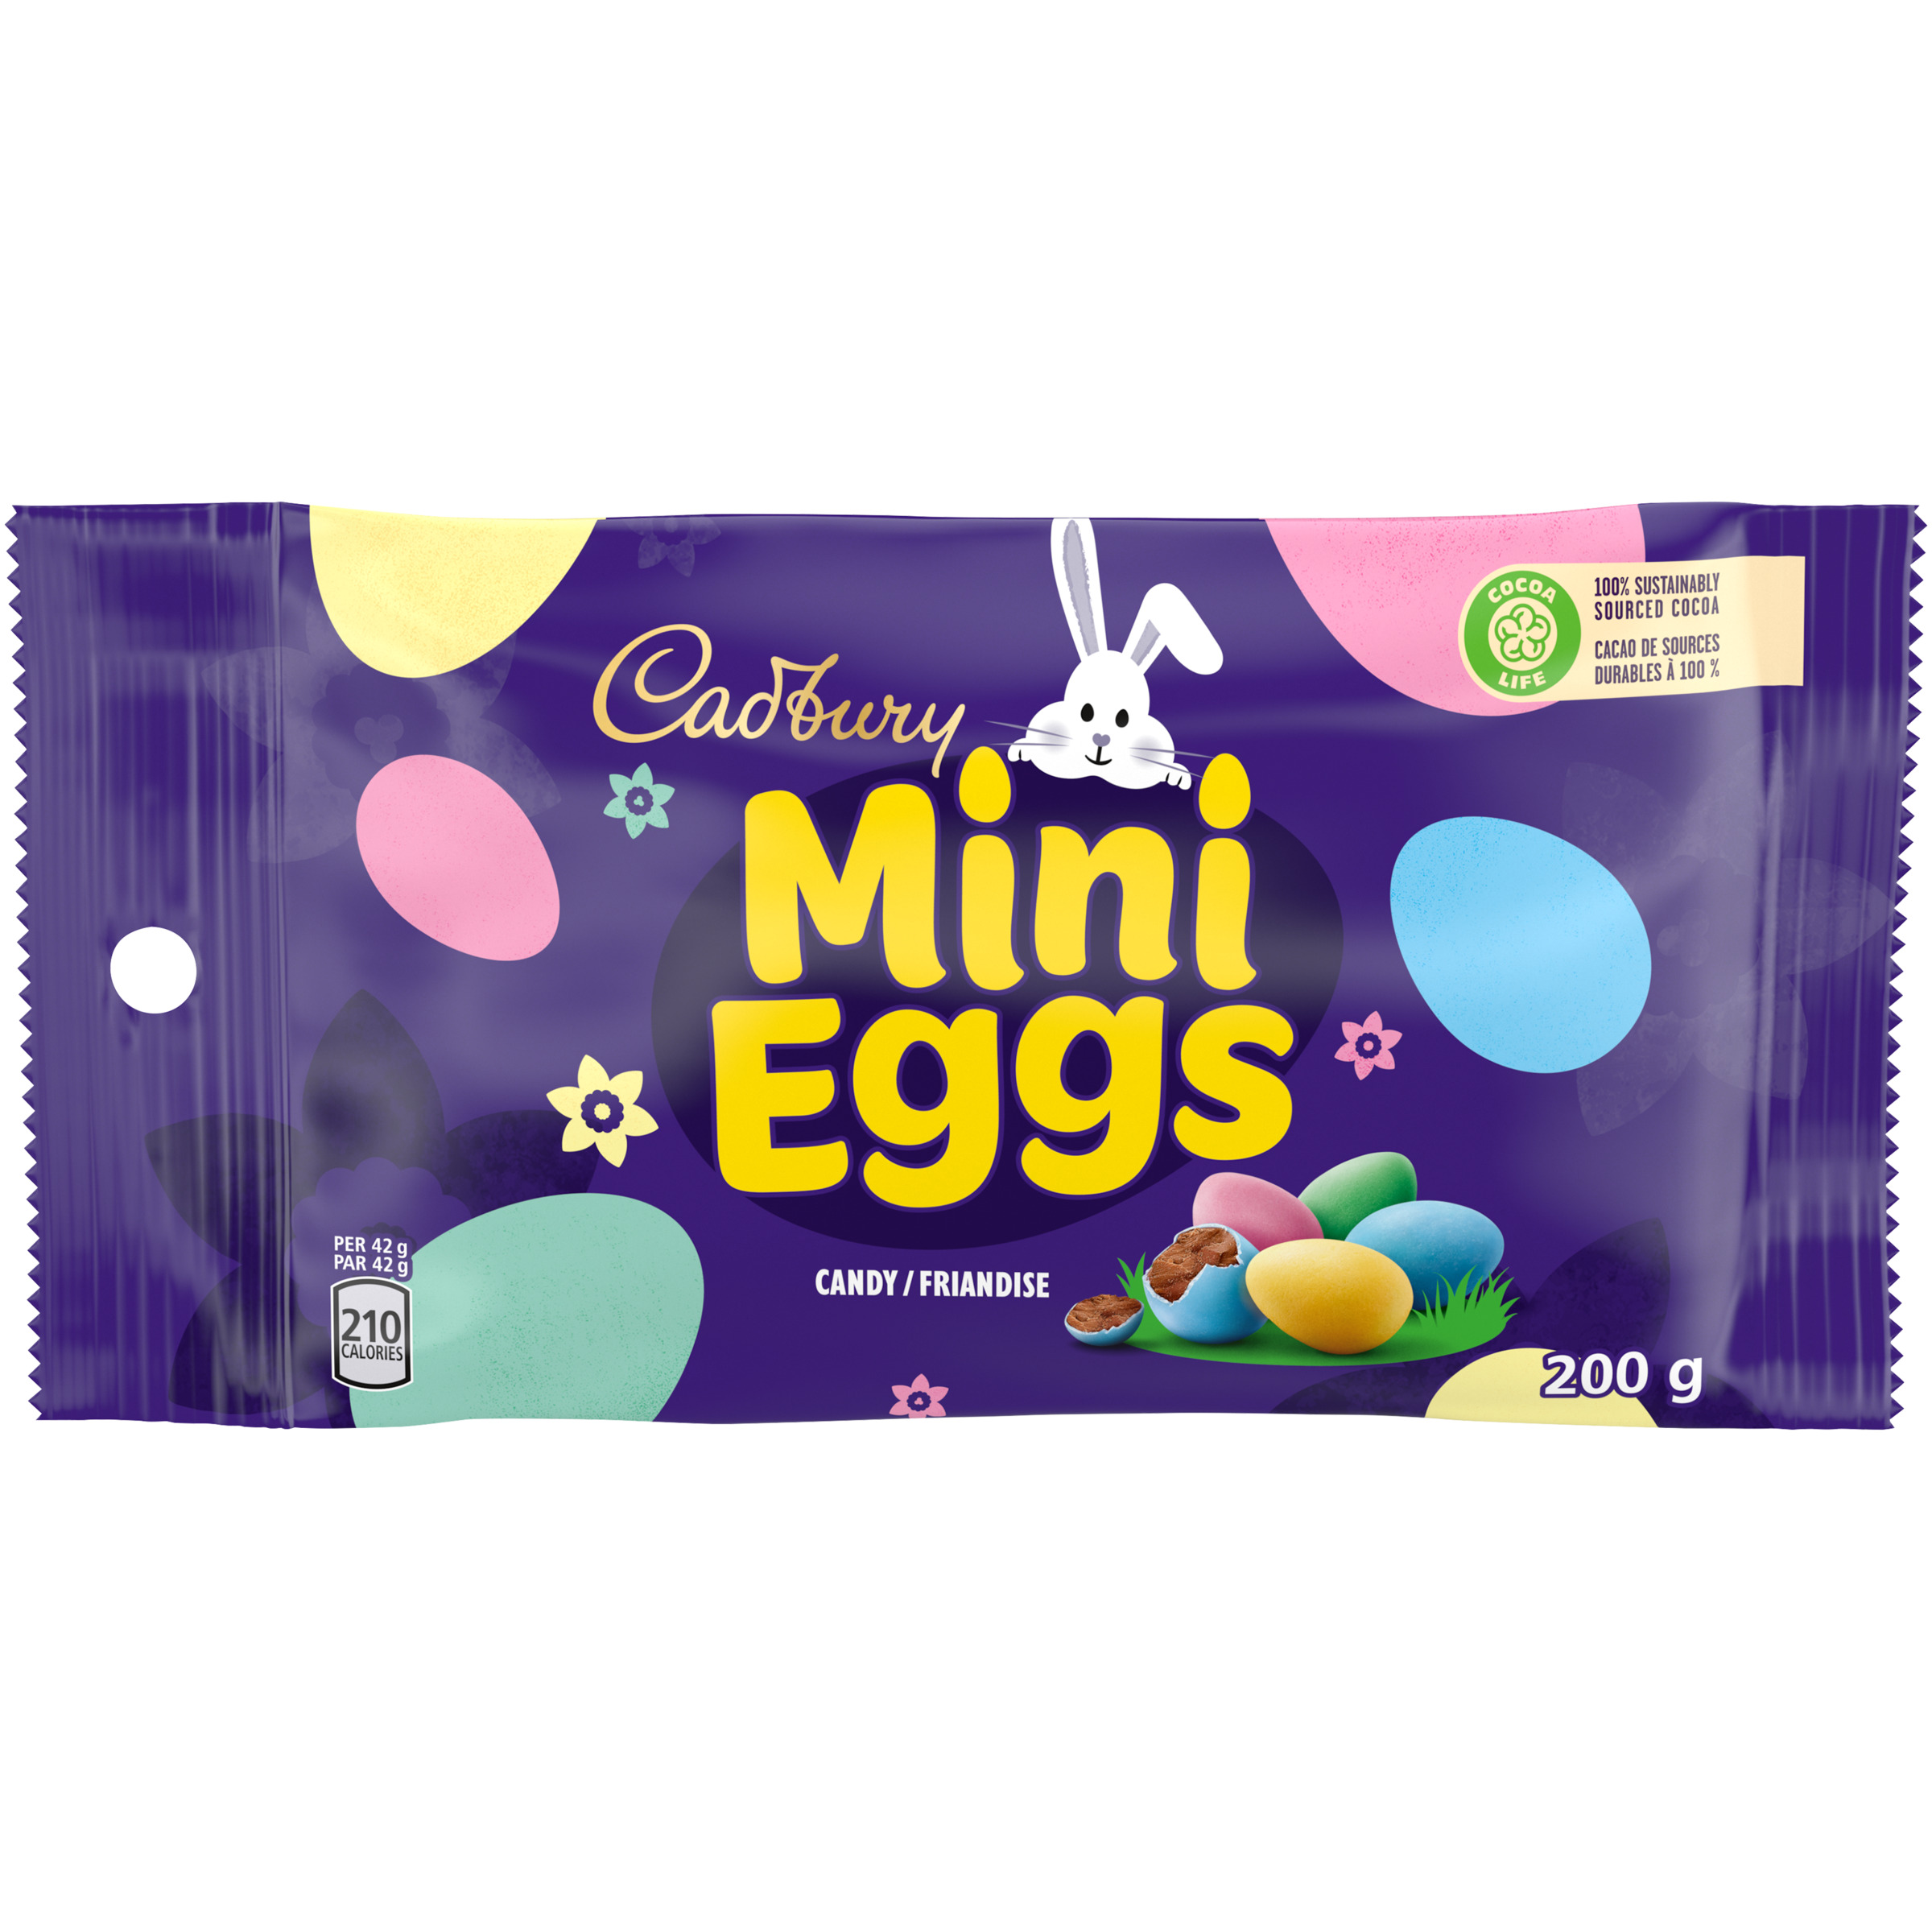 Cadbury Mini Eggs Candy for Easter (200 g)